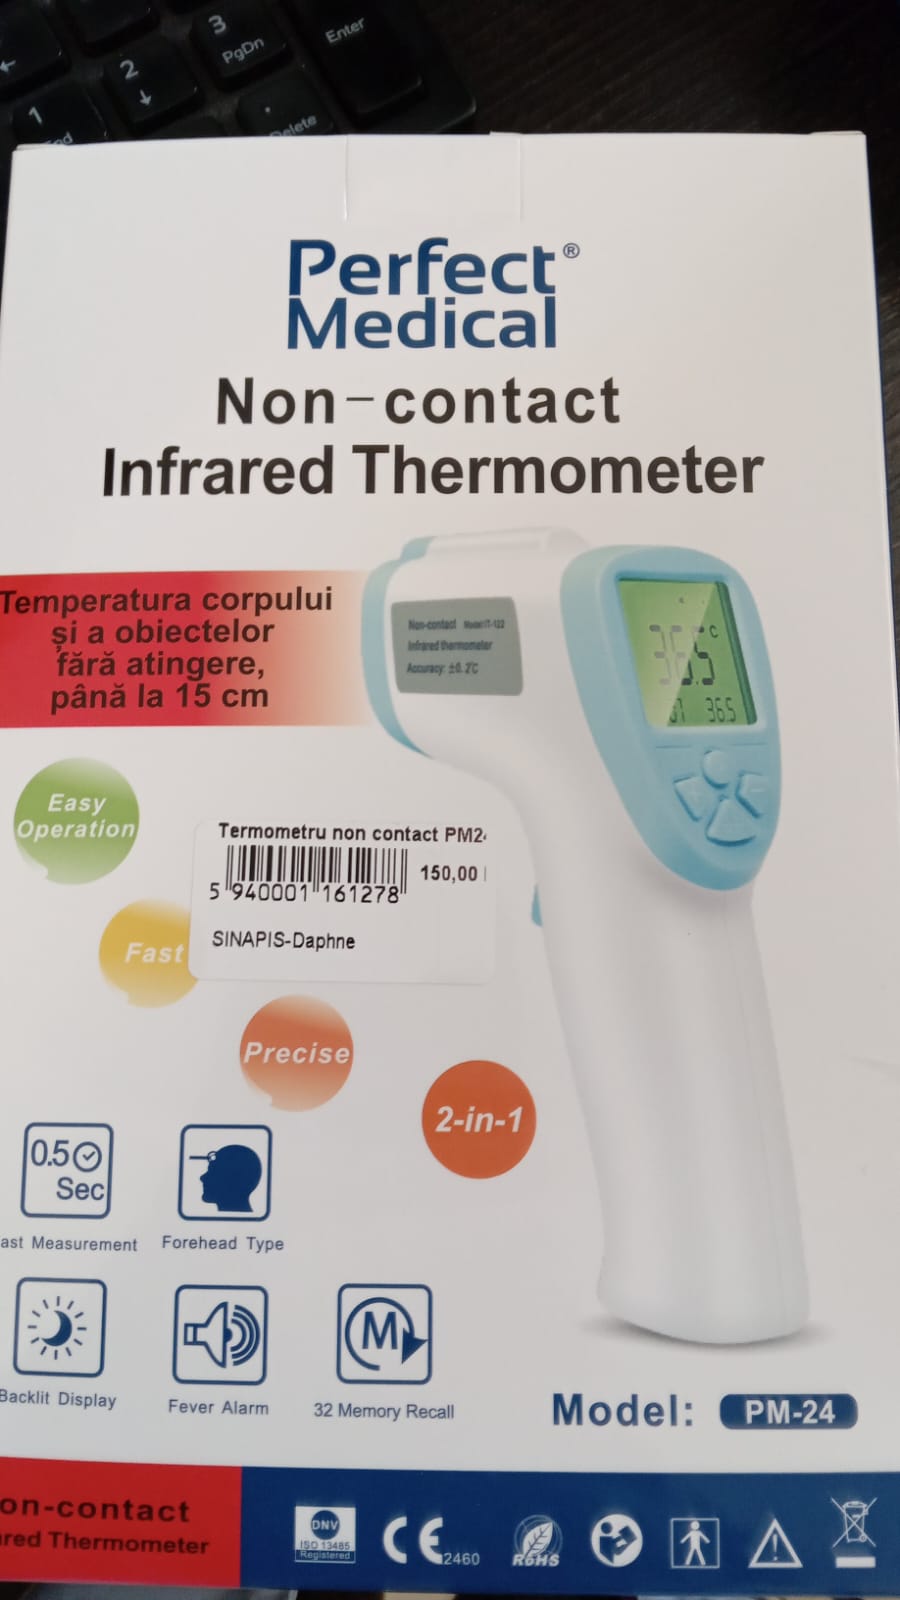 Termometre - Termometru cu infraroșu non-contact, PM-24, Perfect Medical, sinapis.ro